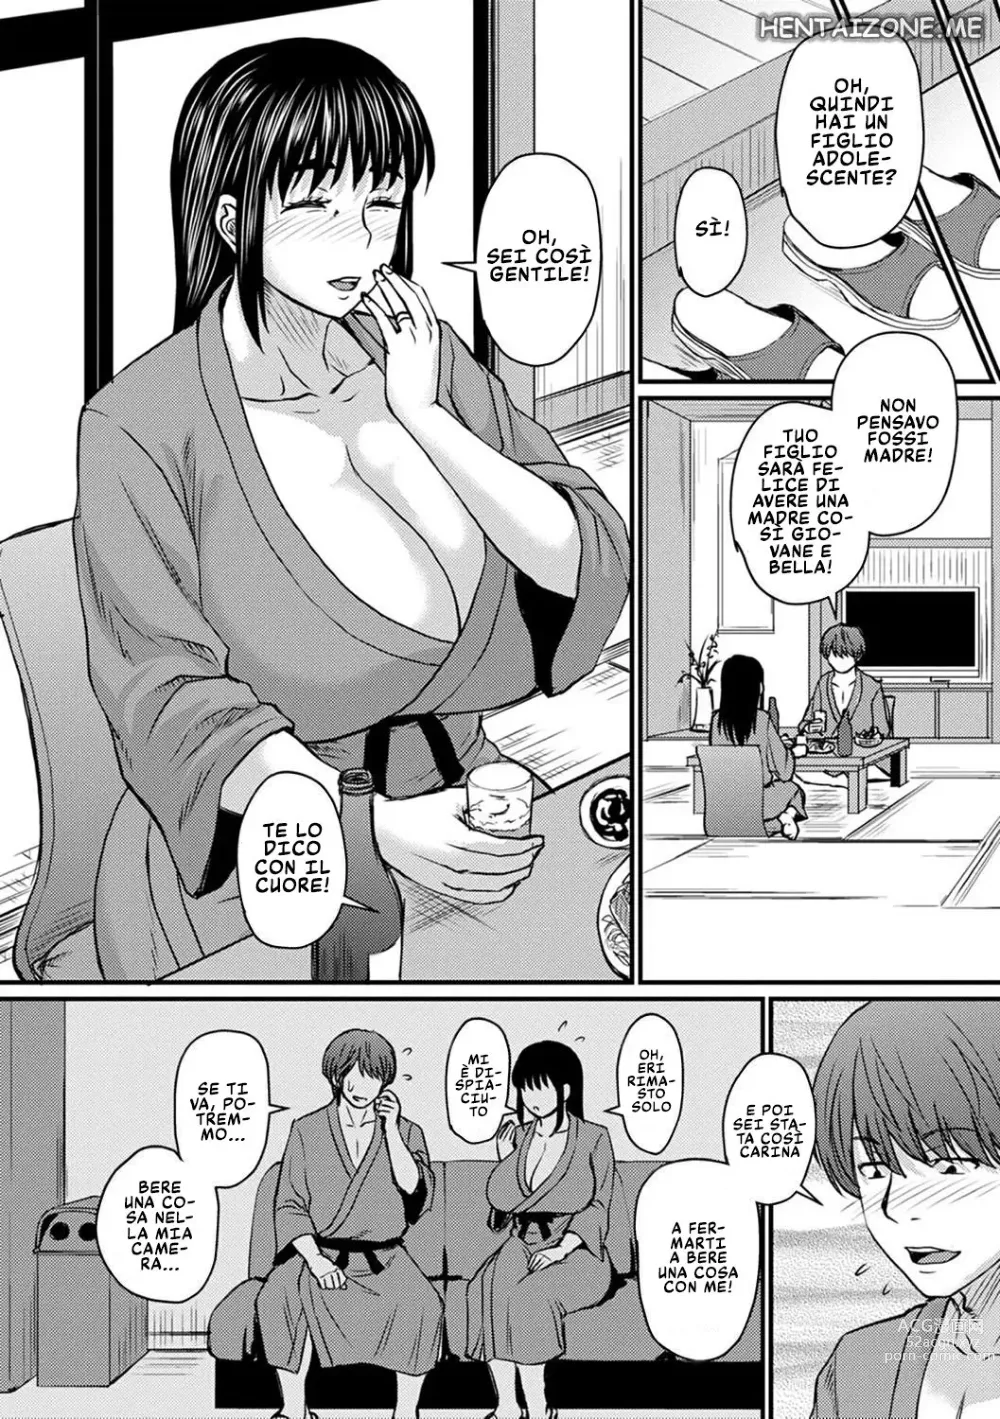 Page 6 of manga Mamma in Vacanza da Sola